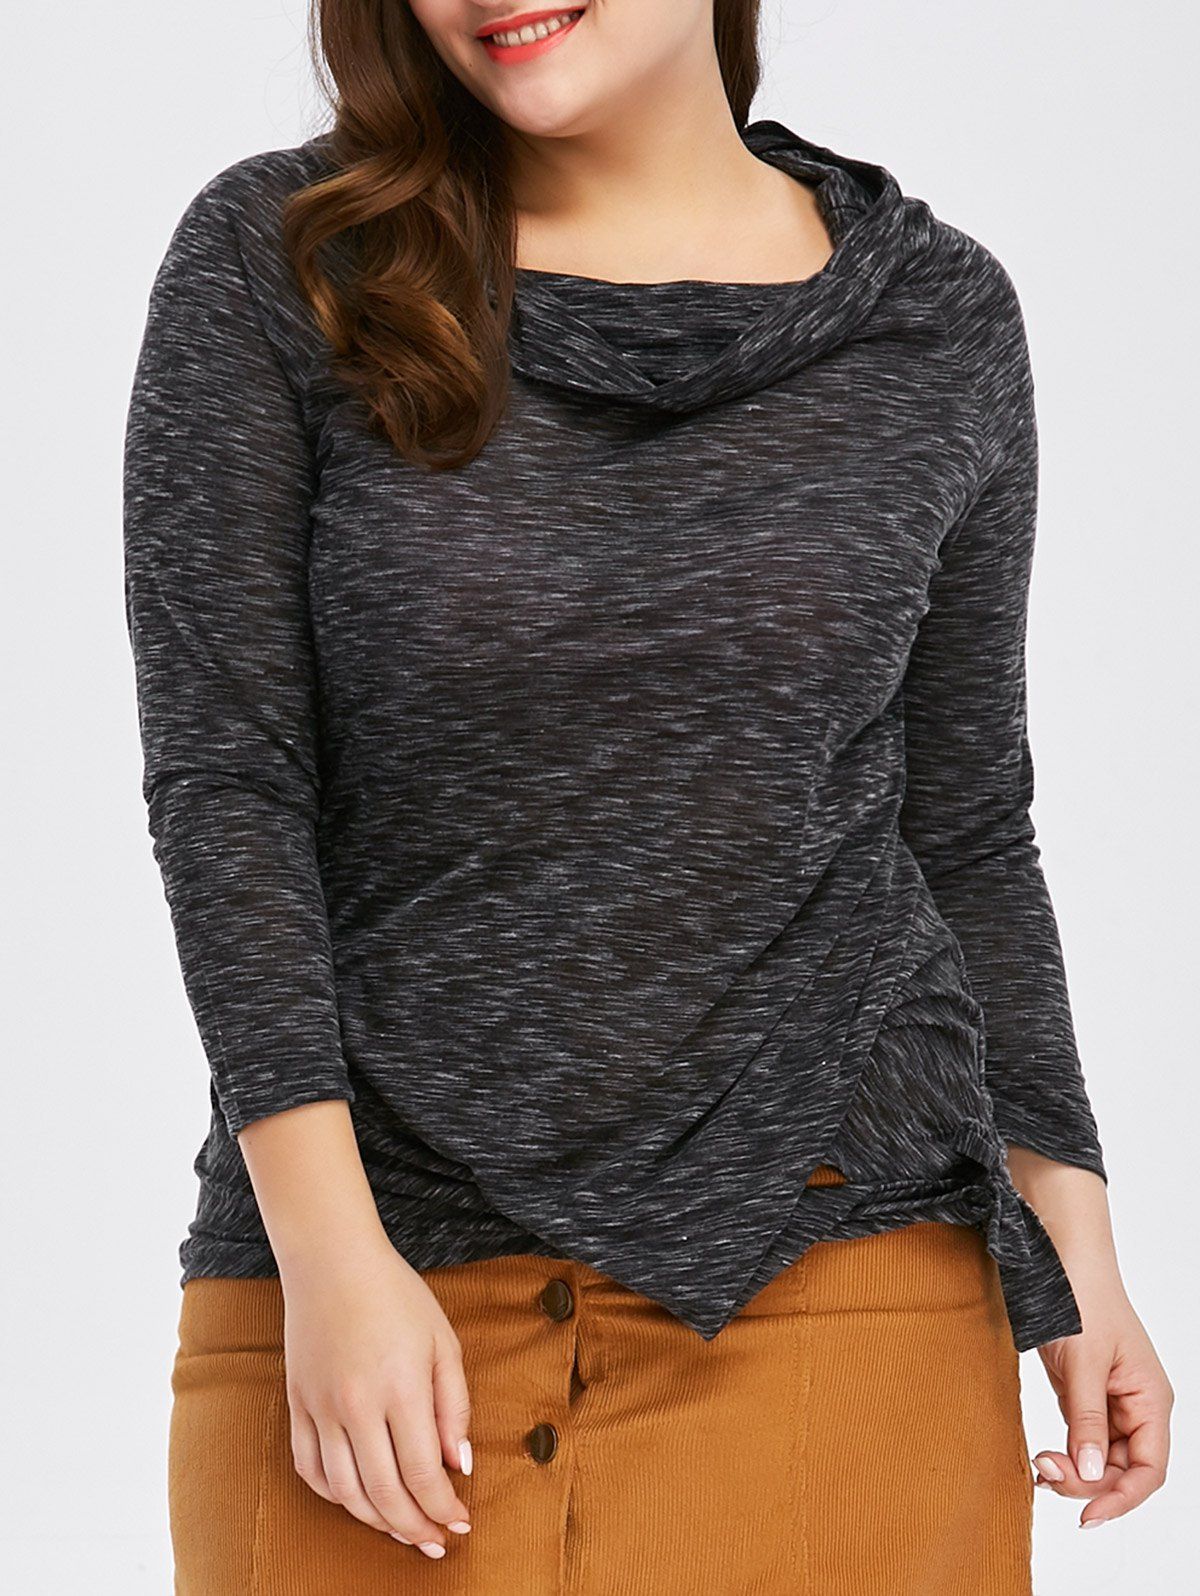 Fashionable Off-The-Shoulder Solid Color Plus Size 3/4 Sleeve Women's T-Shirt - BLACK XL